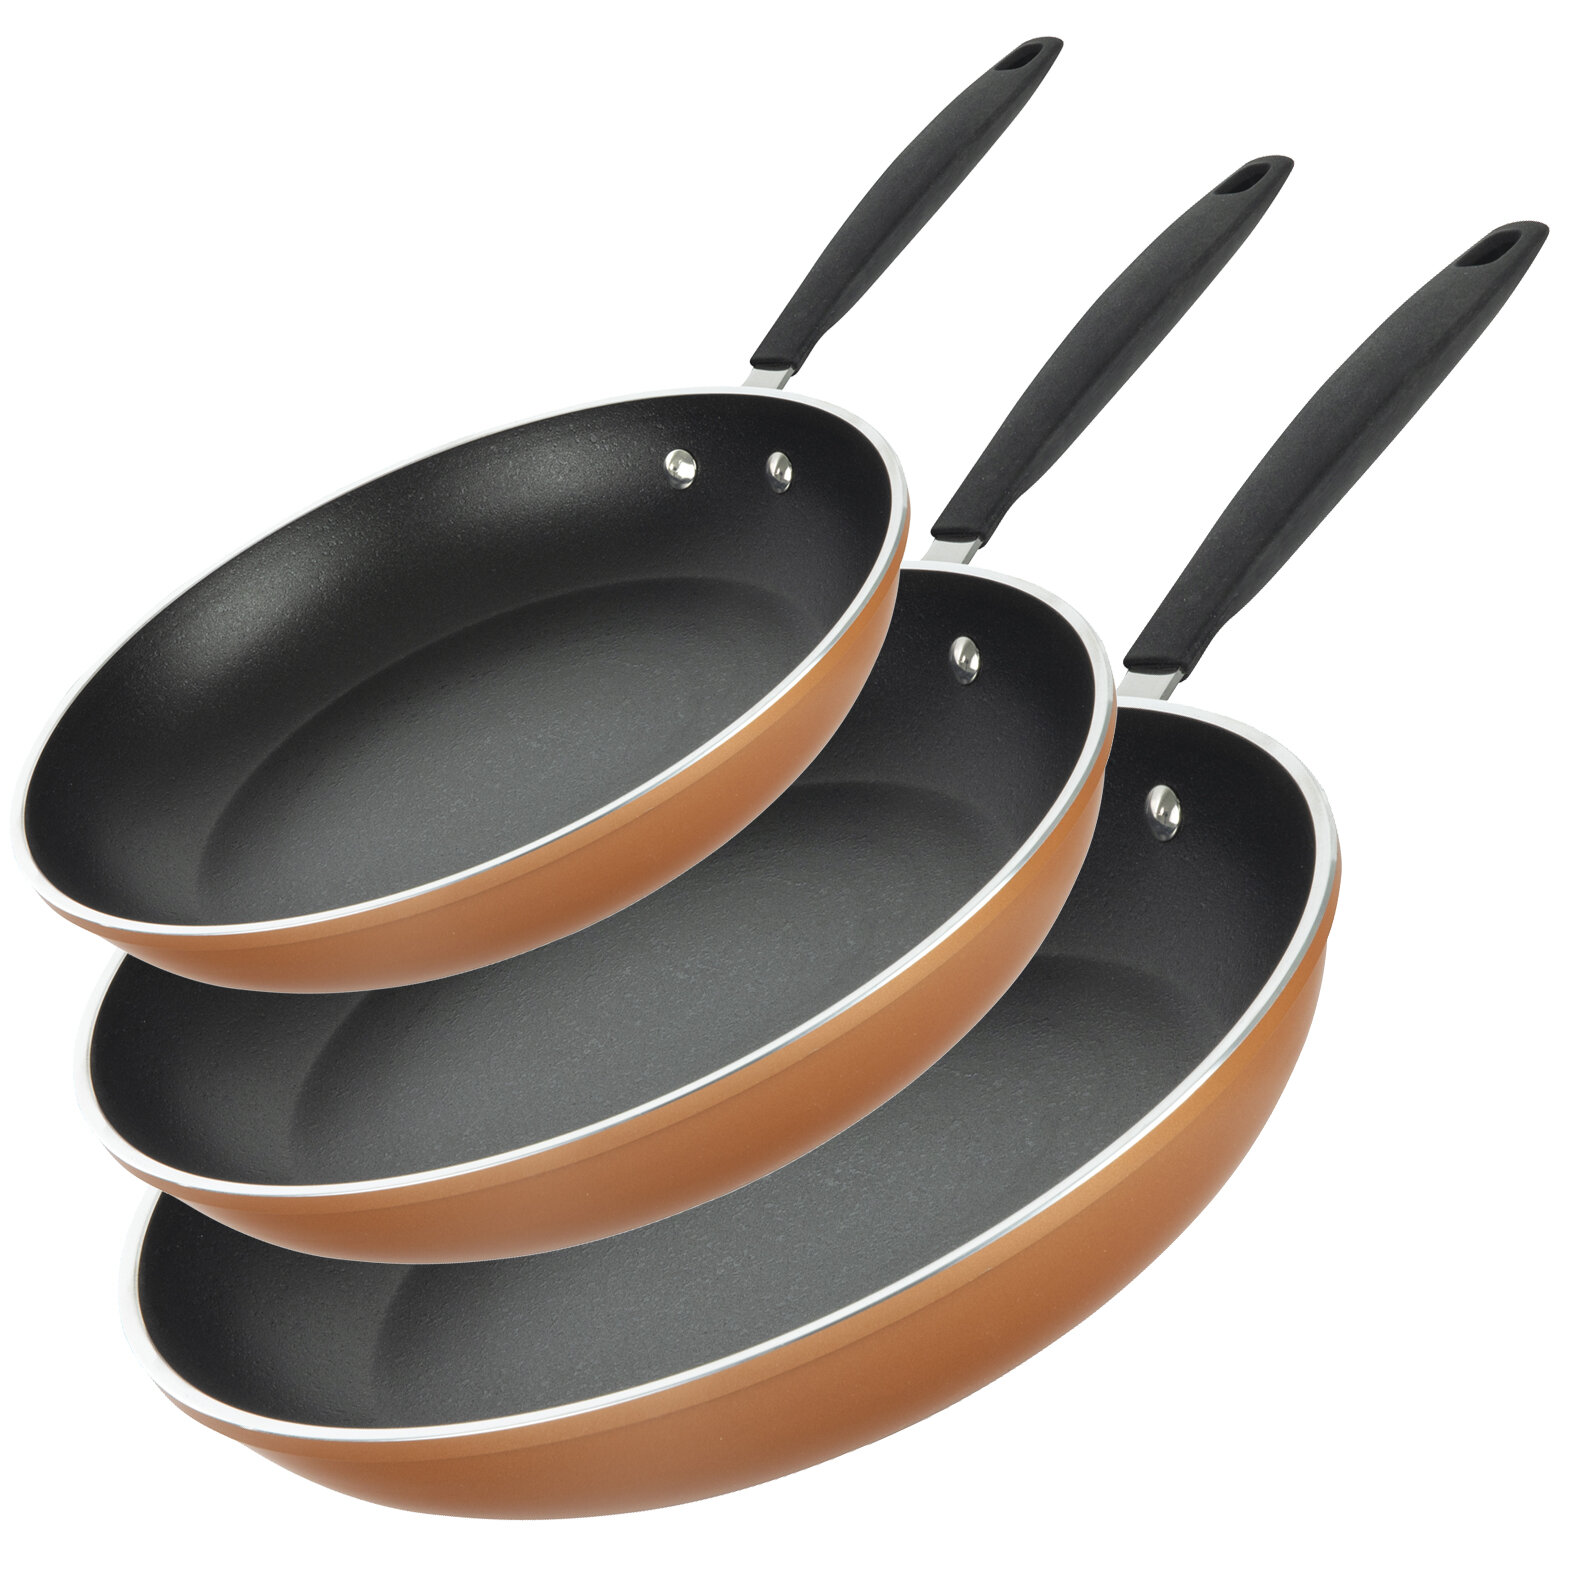  Farberware Glide Nonstick Frying Pan Set / Fry Pan Set / Skillet  Set - 9.25 Inch and 11.25 Inch , Black : Home & Kitchen